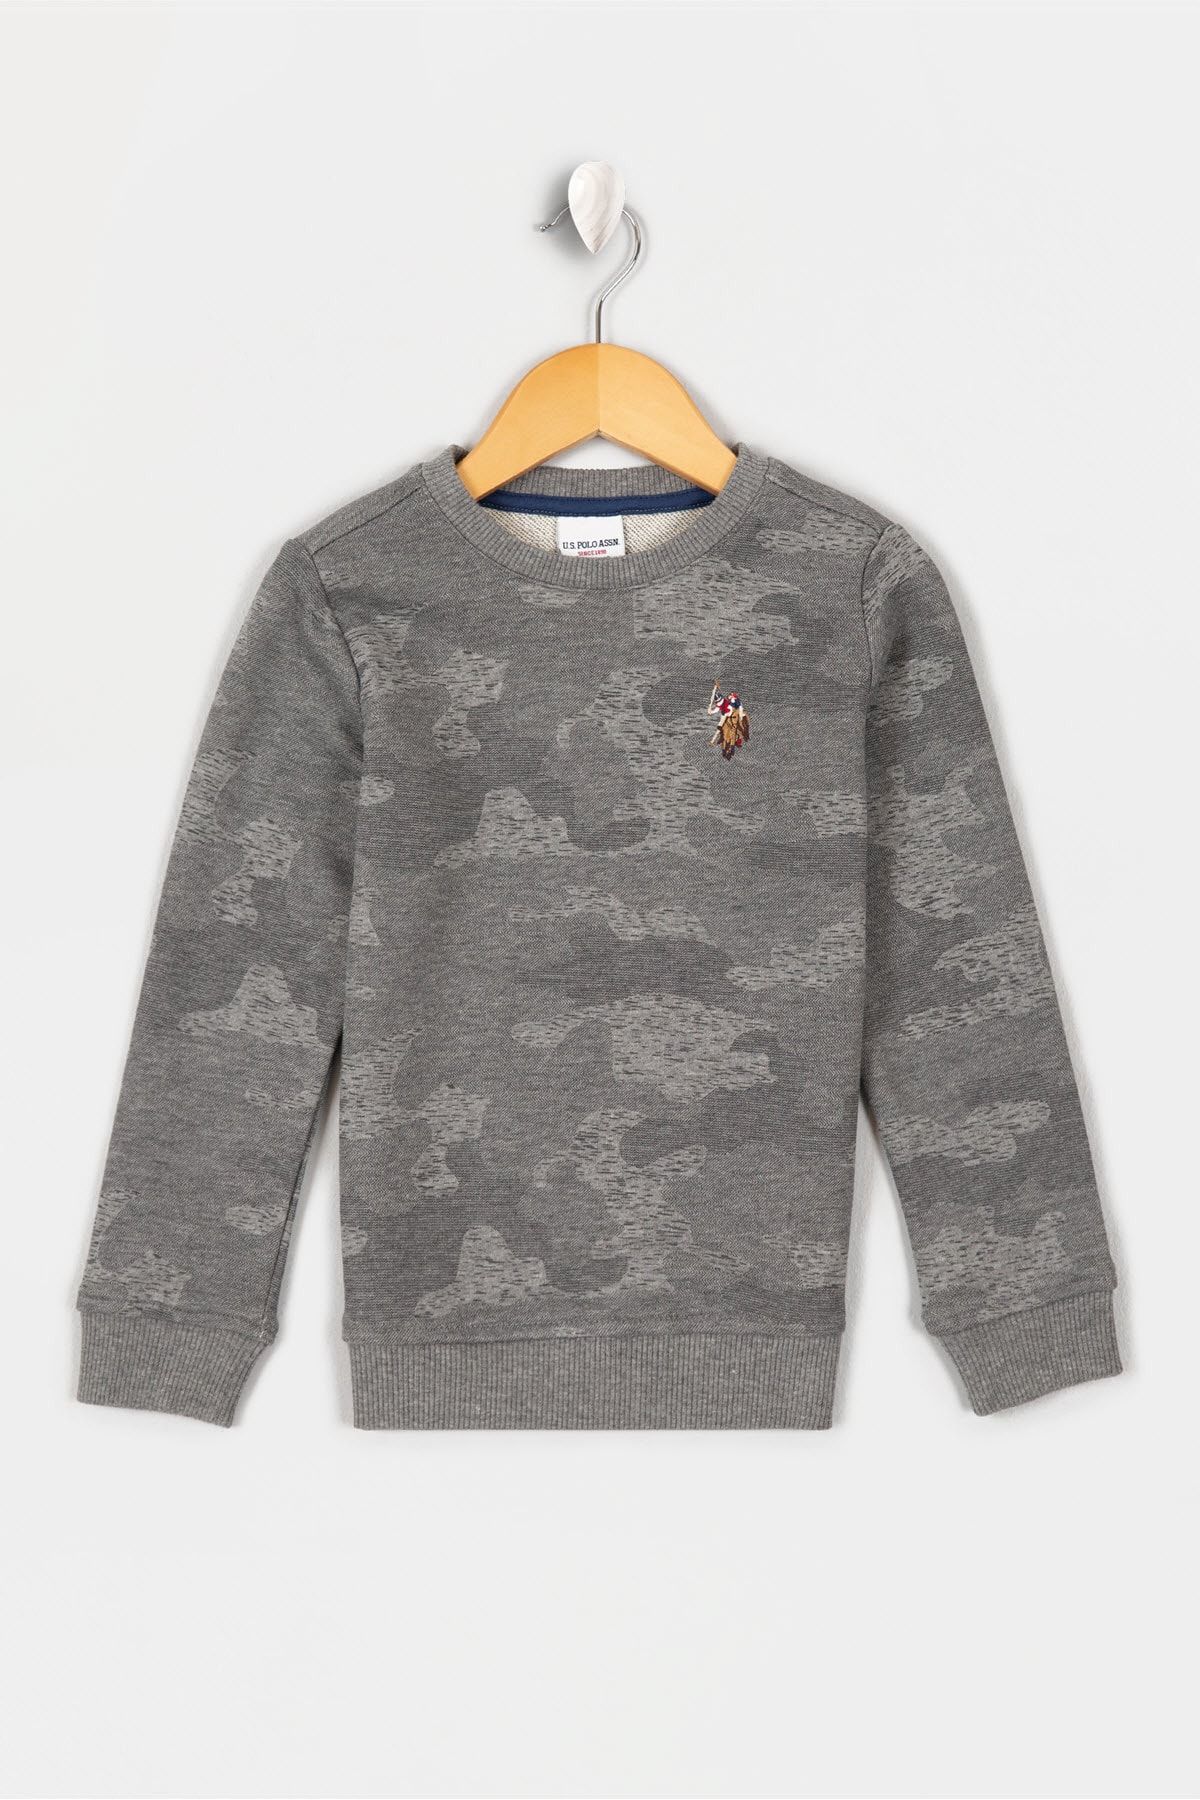 U.S. Polo Assn. Grı Erkek Çocuk Pıxkıds-E Sweatshirt